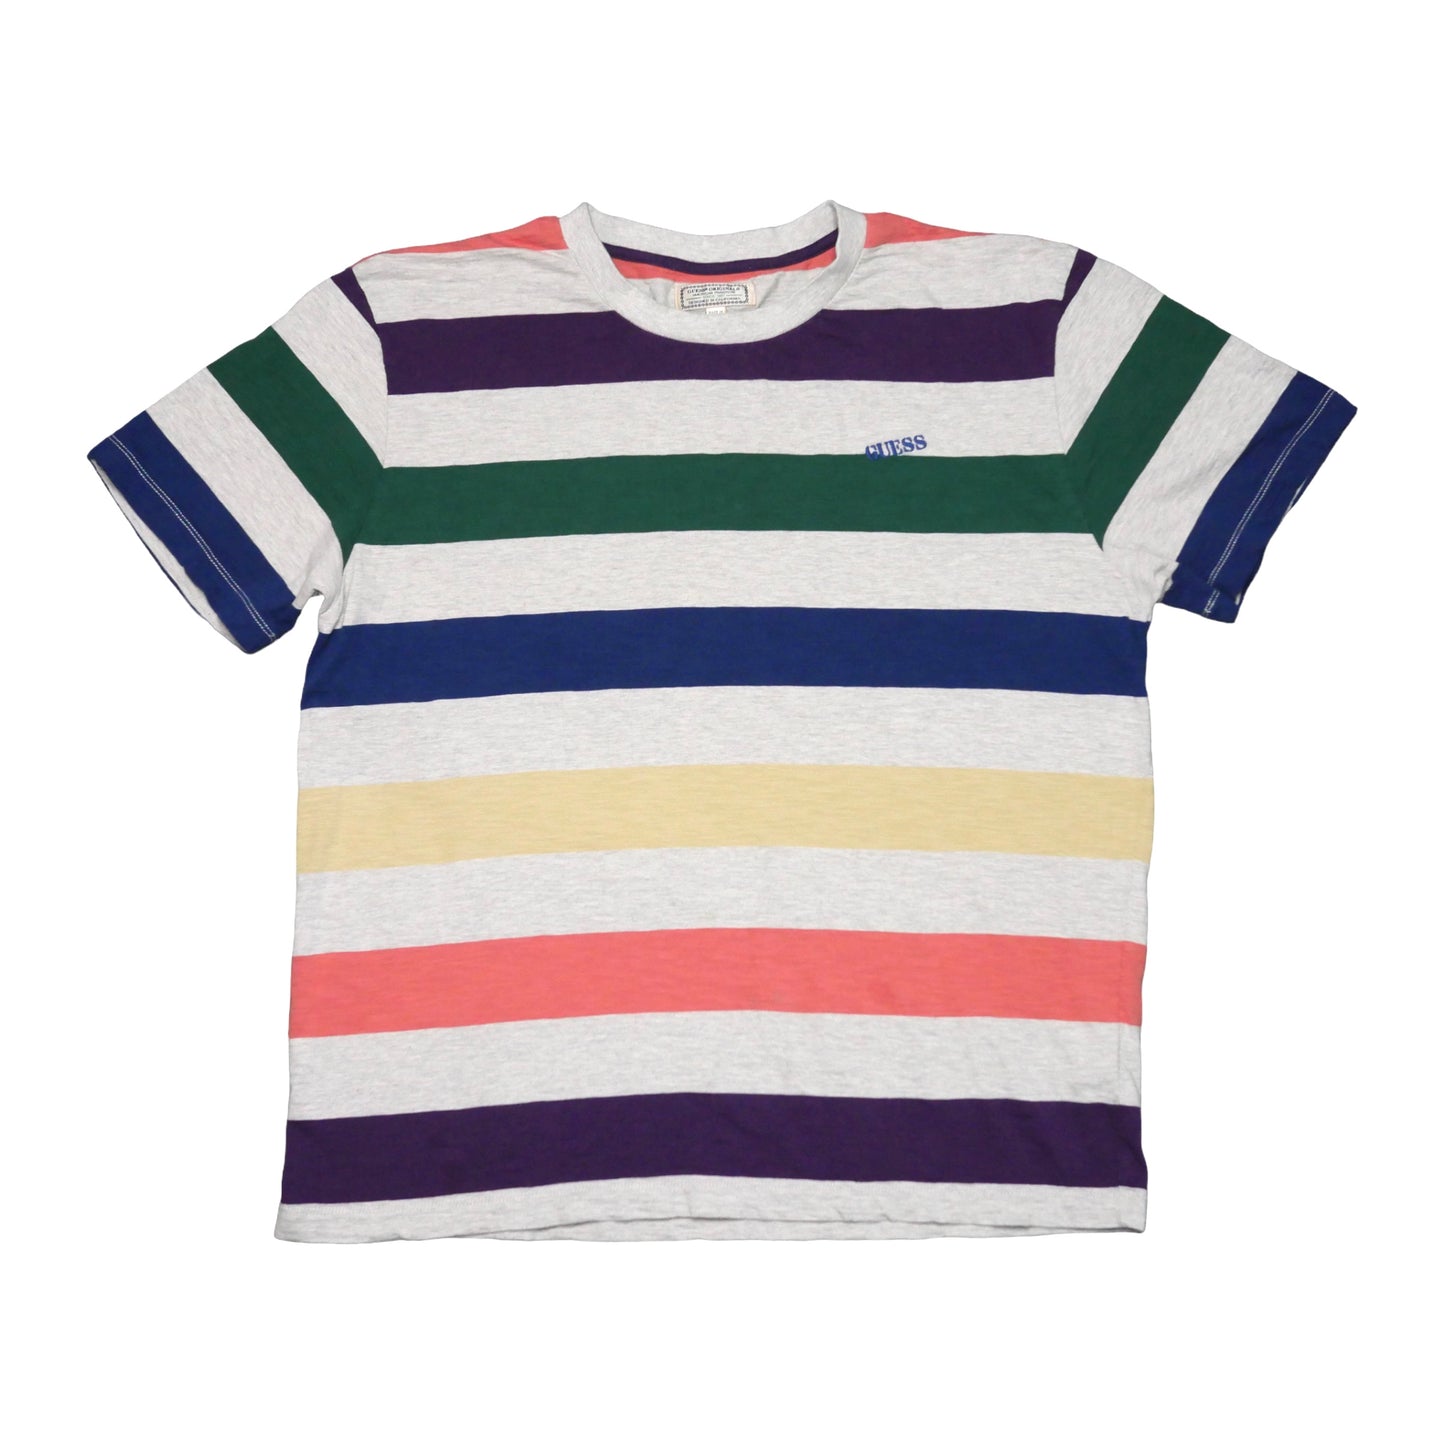 Guess Multi Color Stripe Shirt - Large